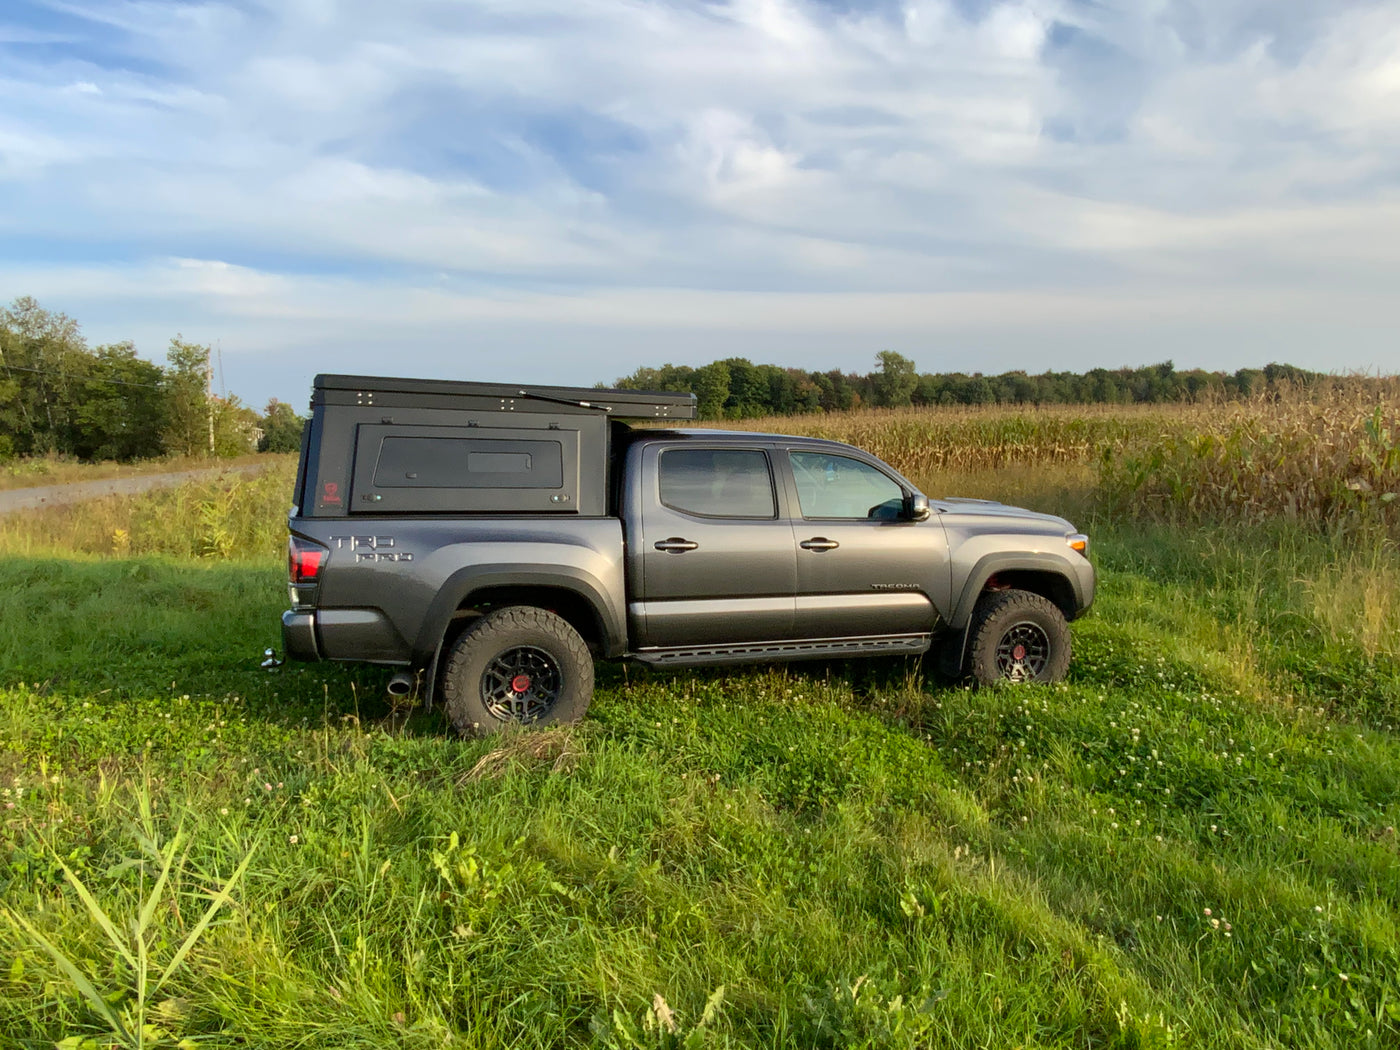 Boîte de lit de camping-car pour camion hybride Yukon Utility 